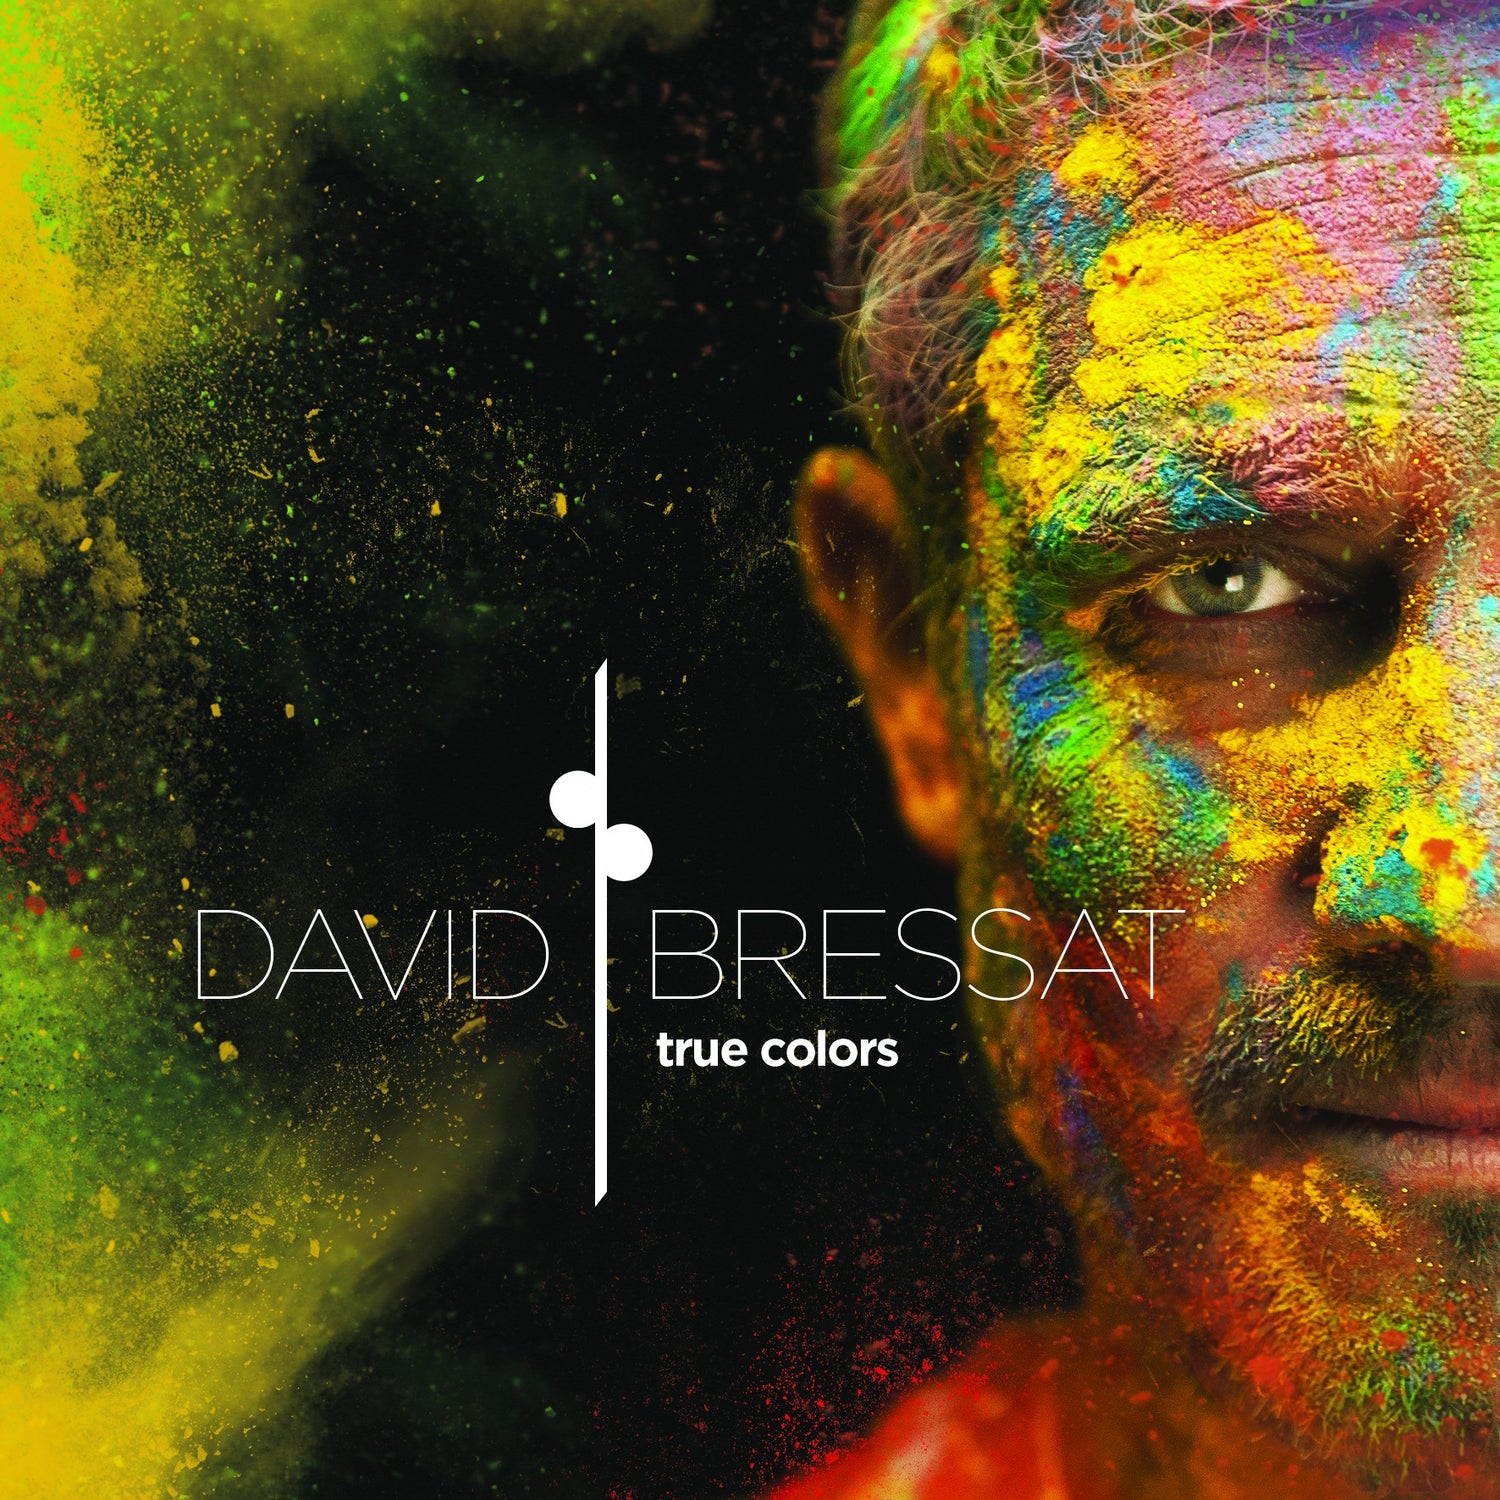 Pochette de : TRUE COLORS - DAVID BRESSAT (CD)